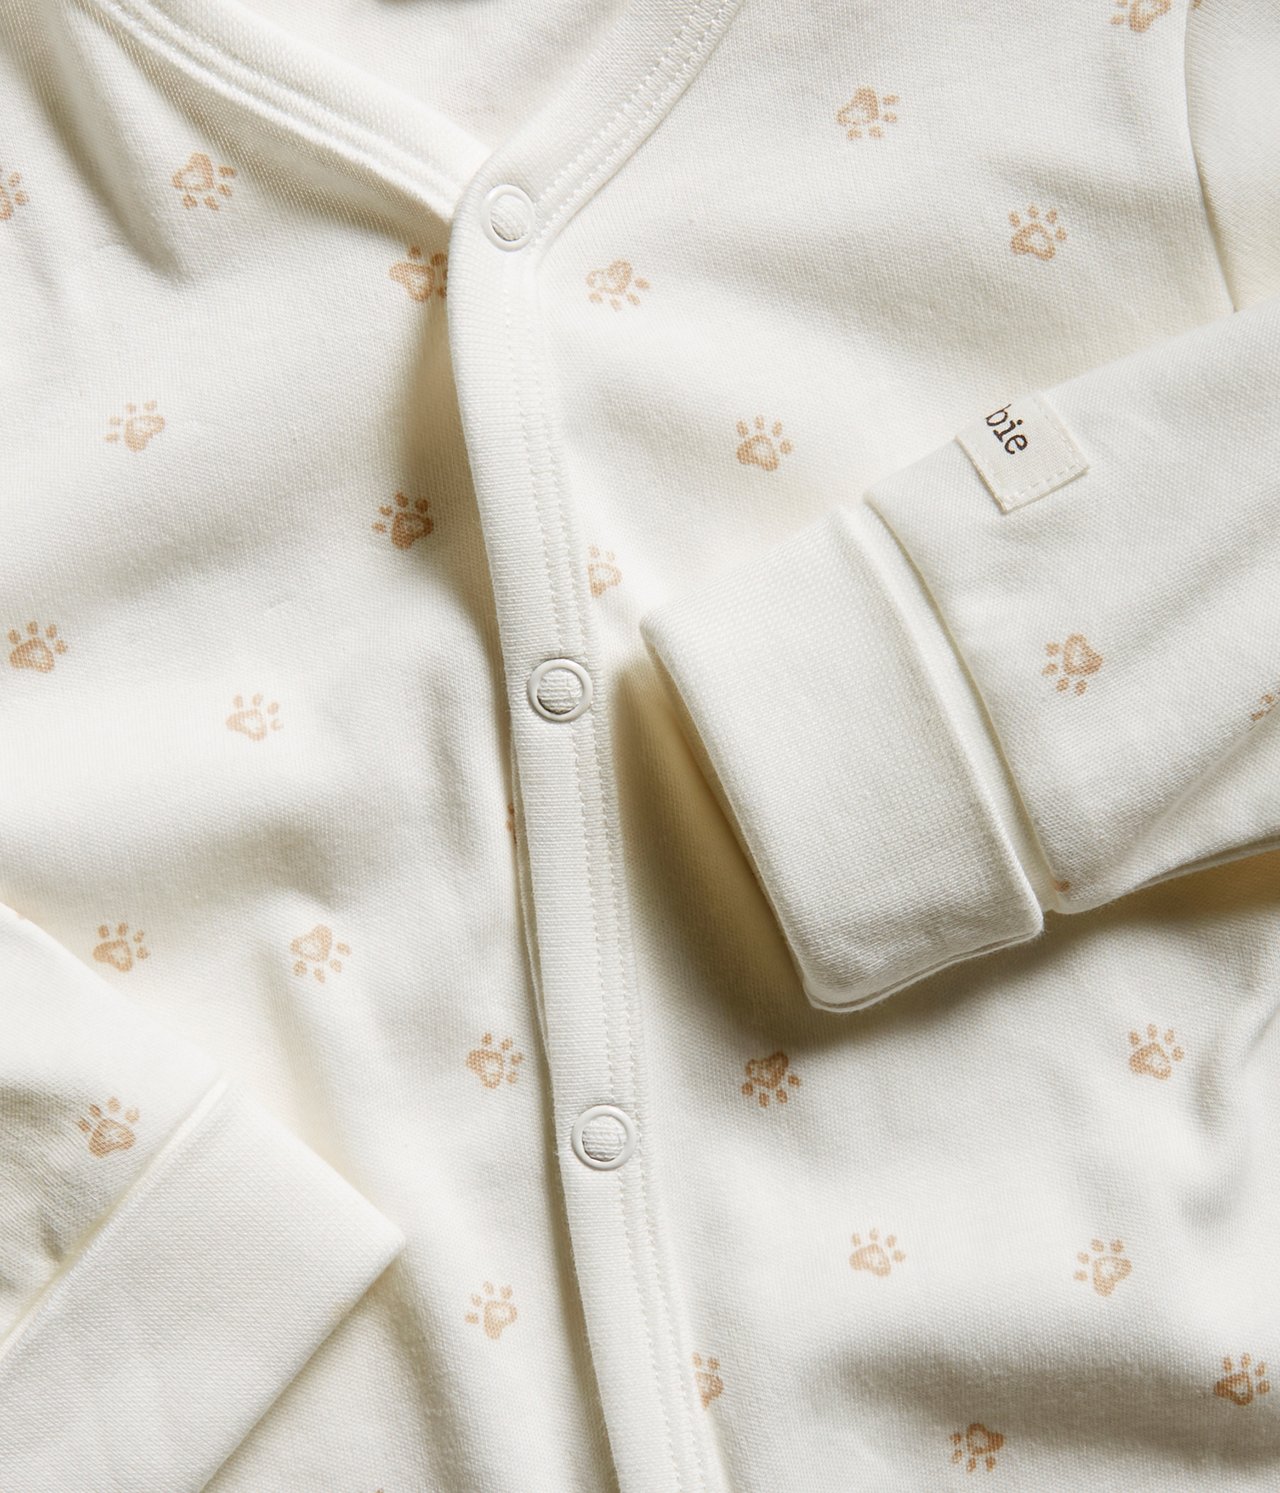 Pyjamas baby Offwhite - null - 0